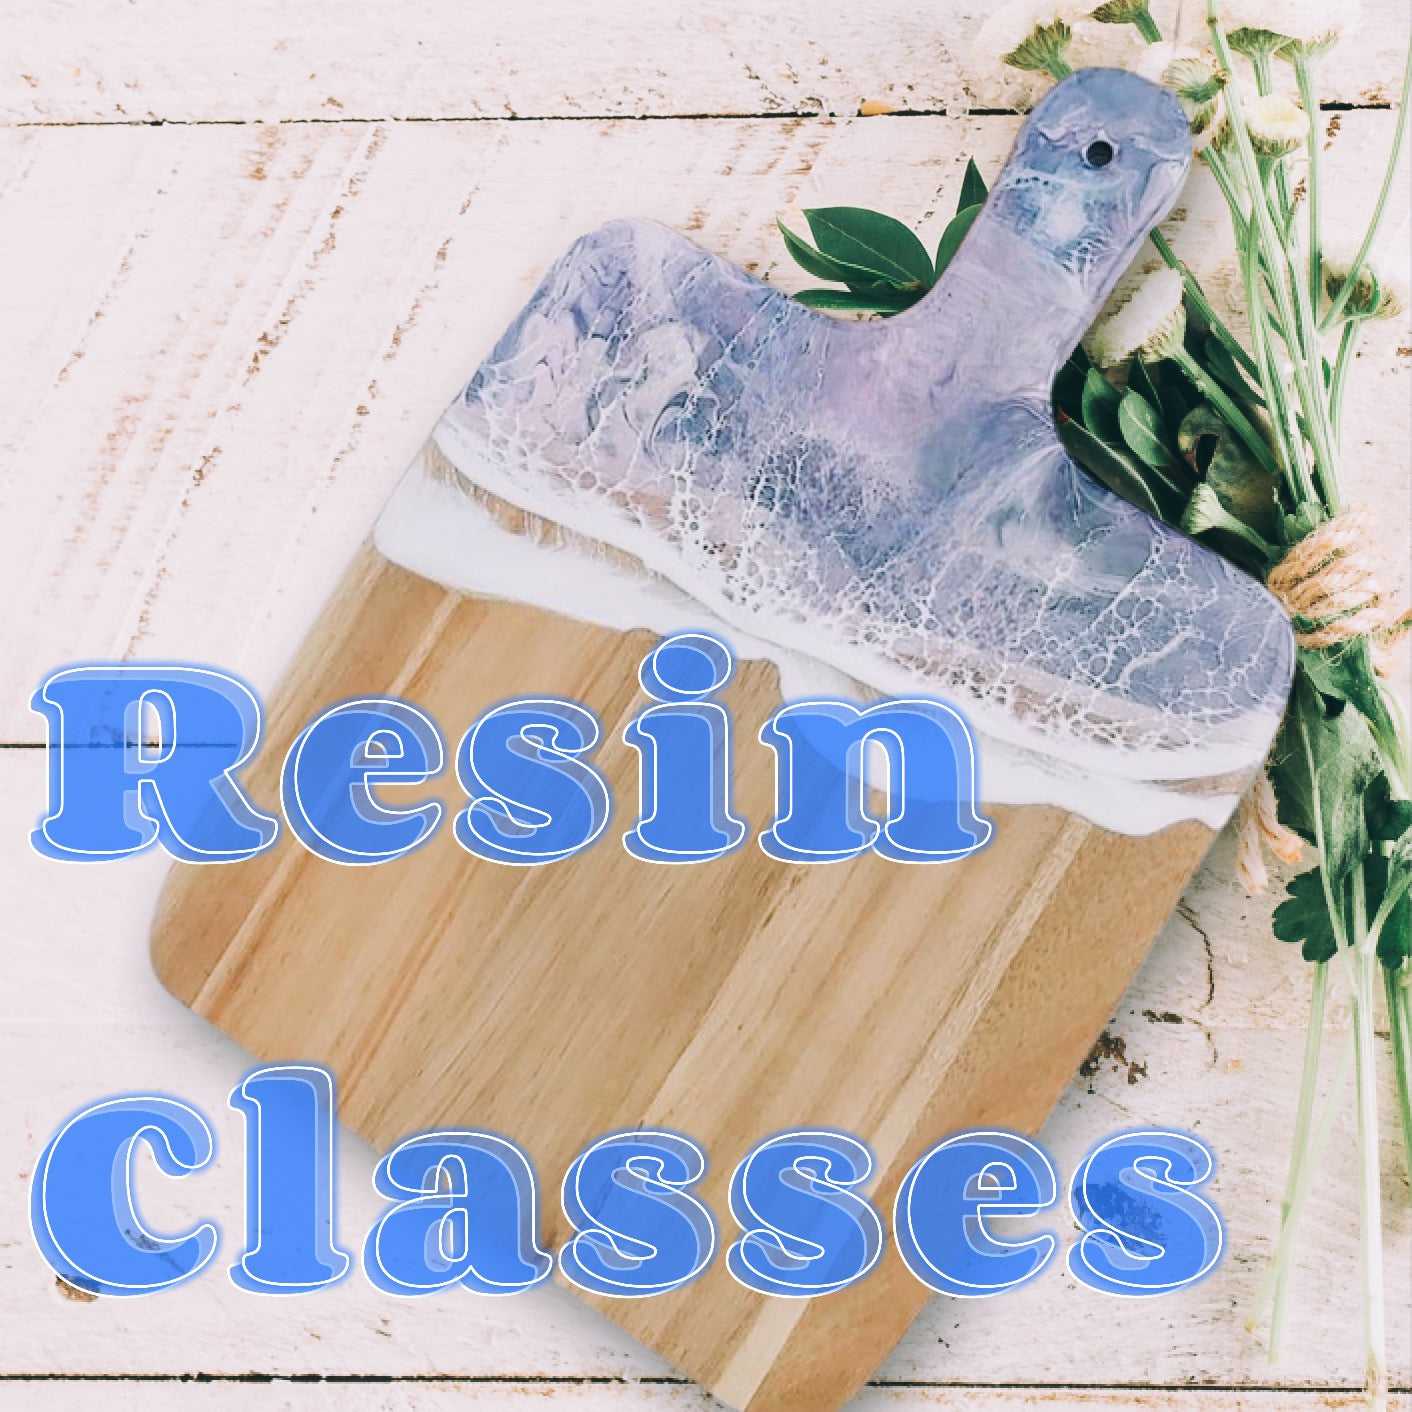 Resin Coaster Class - 3D flower (all resin) Wednesday 3/13 @ 6 PM